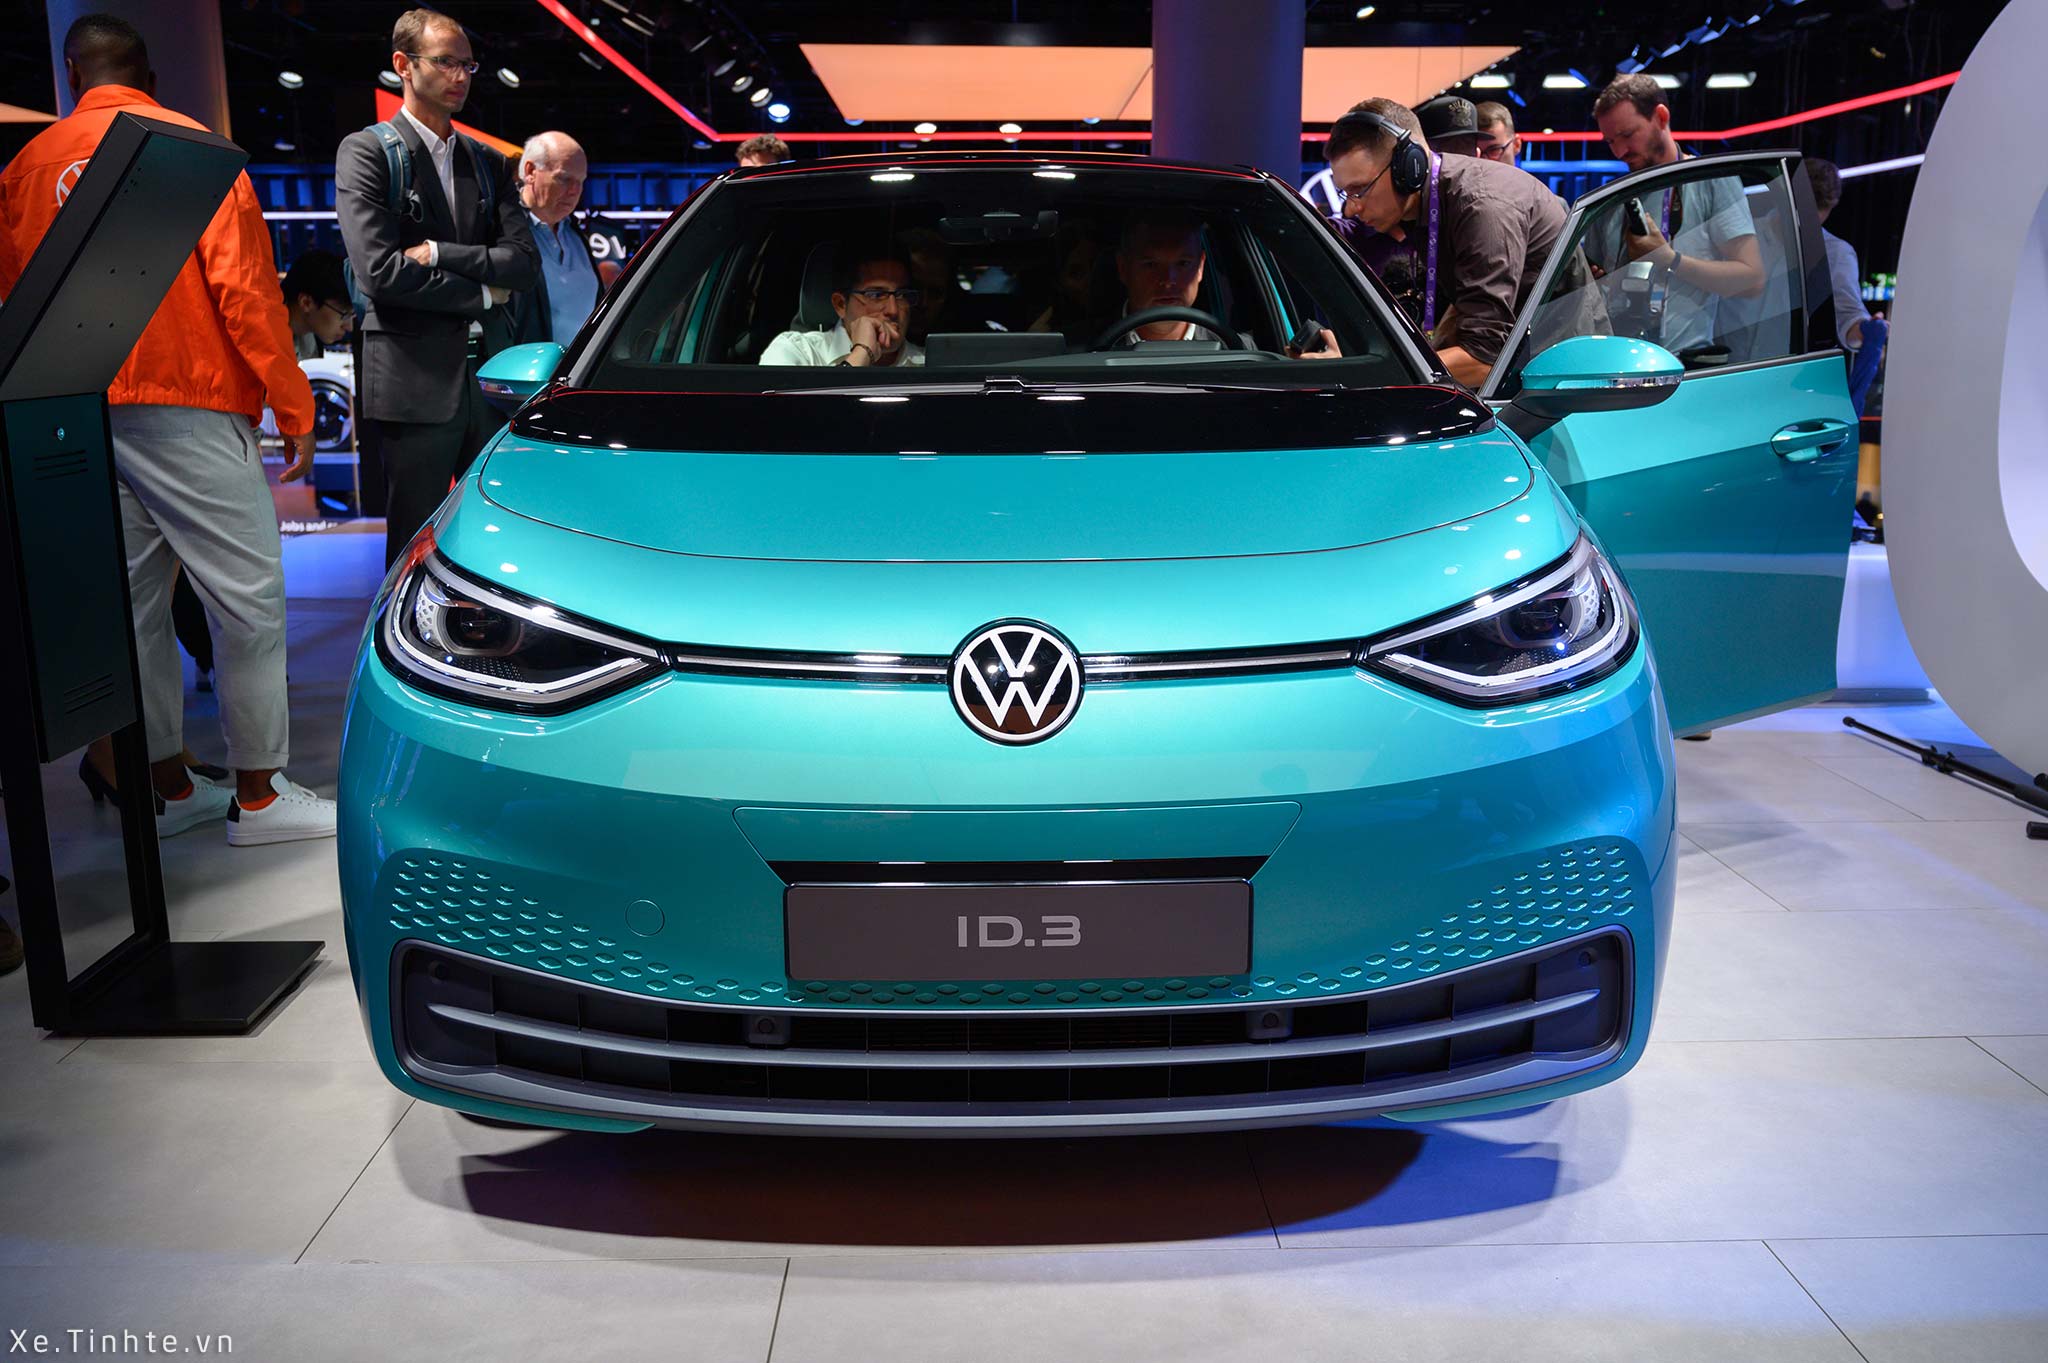 Volkswagen_ID.3_IAA_2019_tinhte_5.jpg